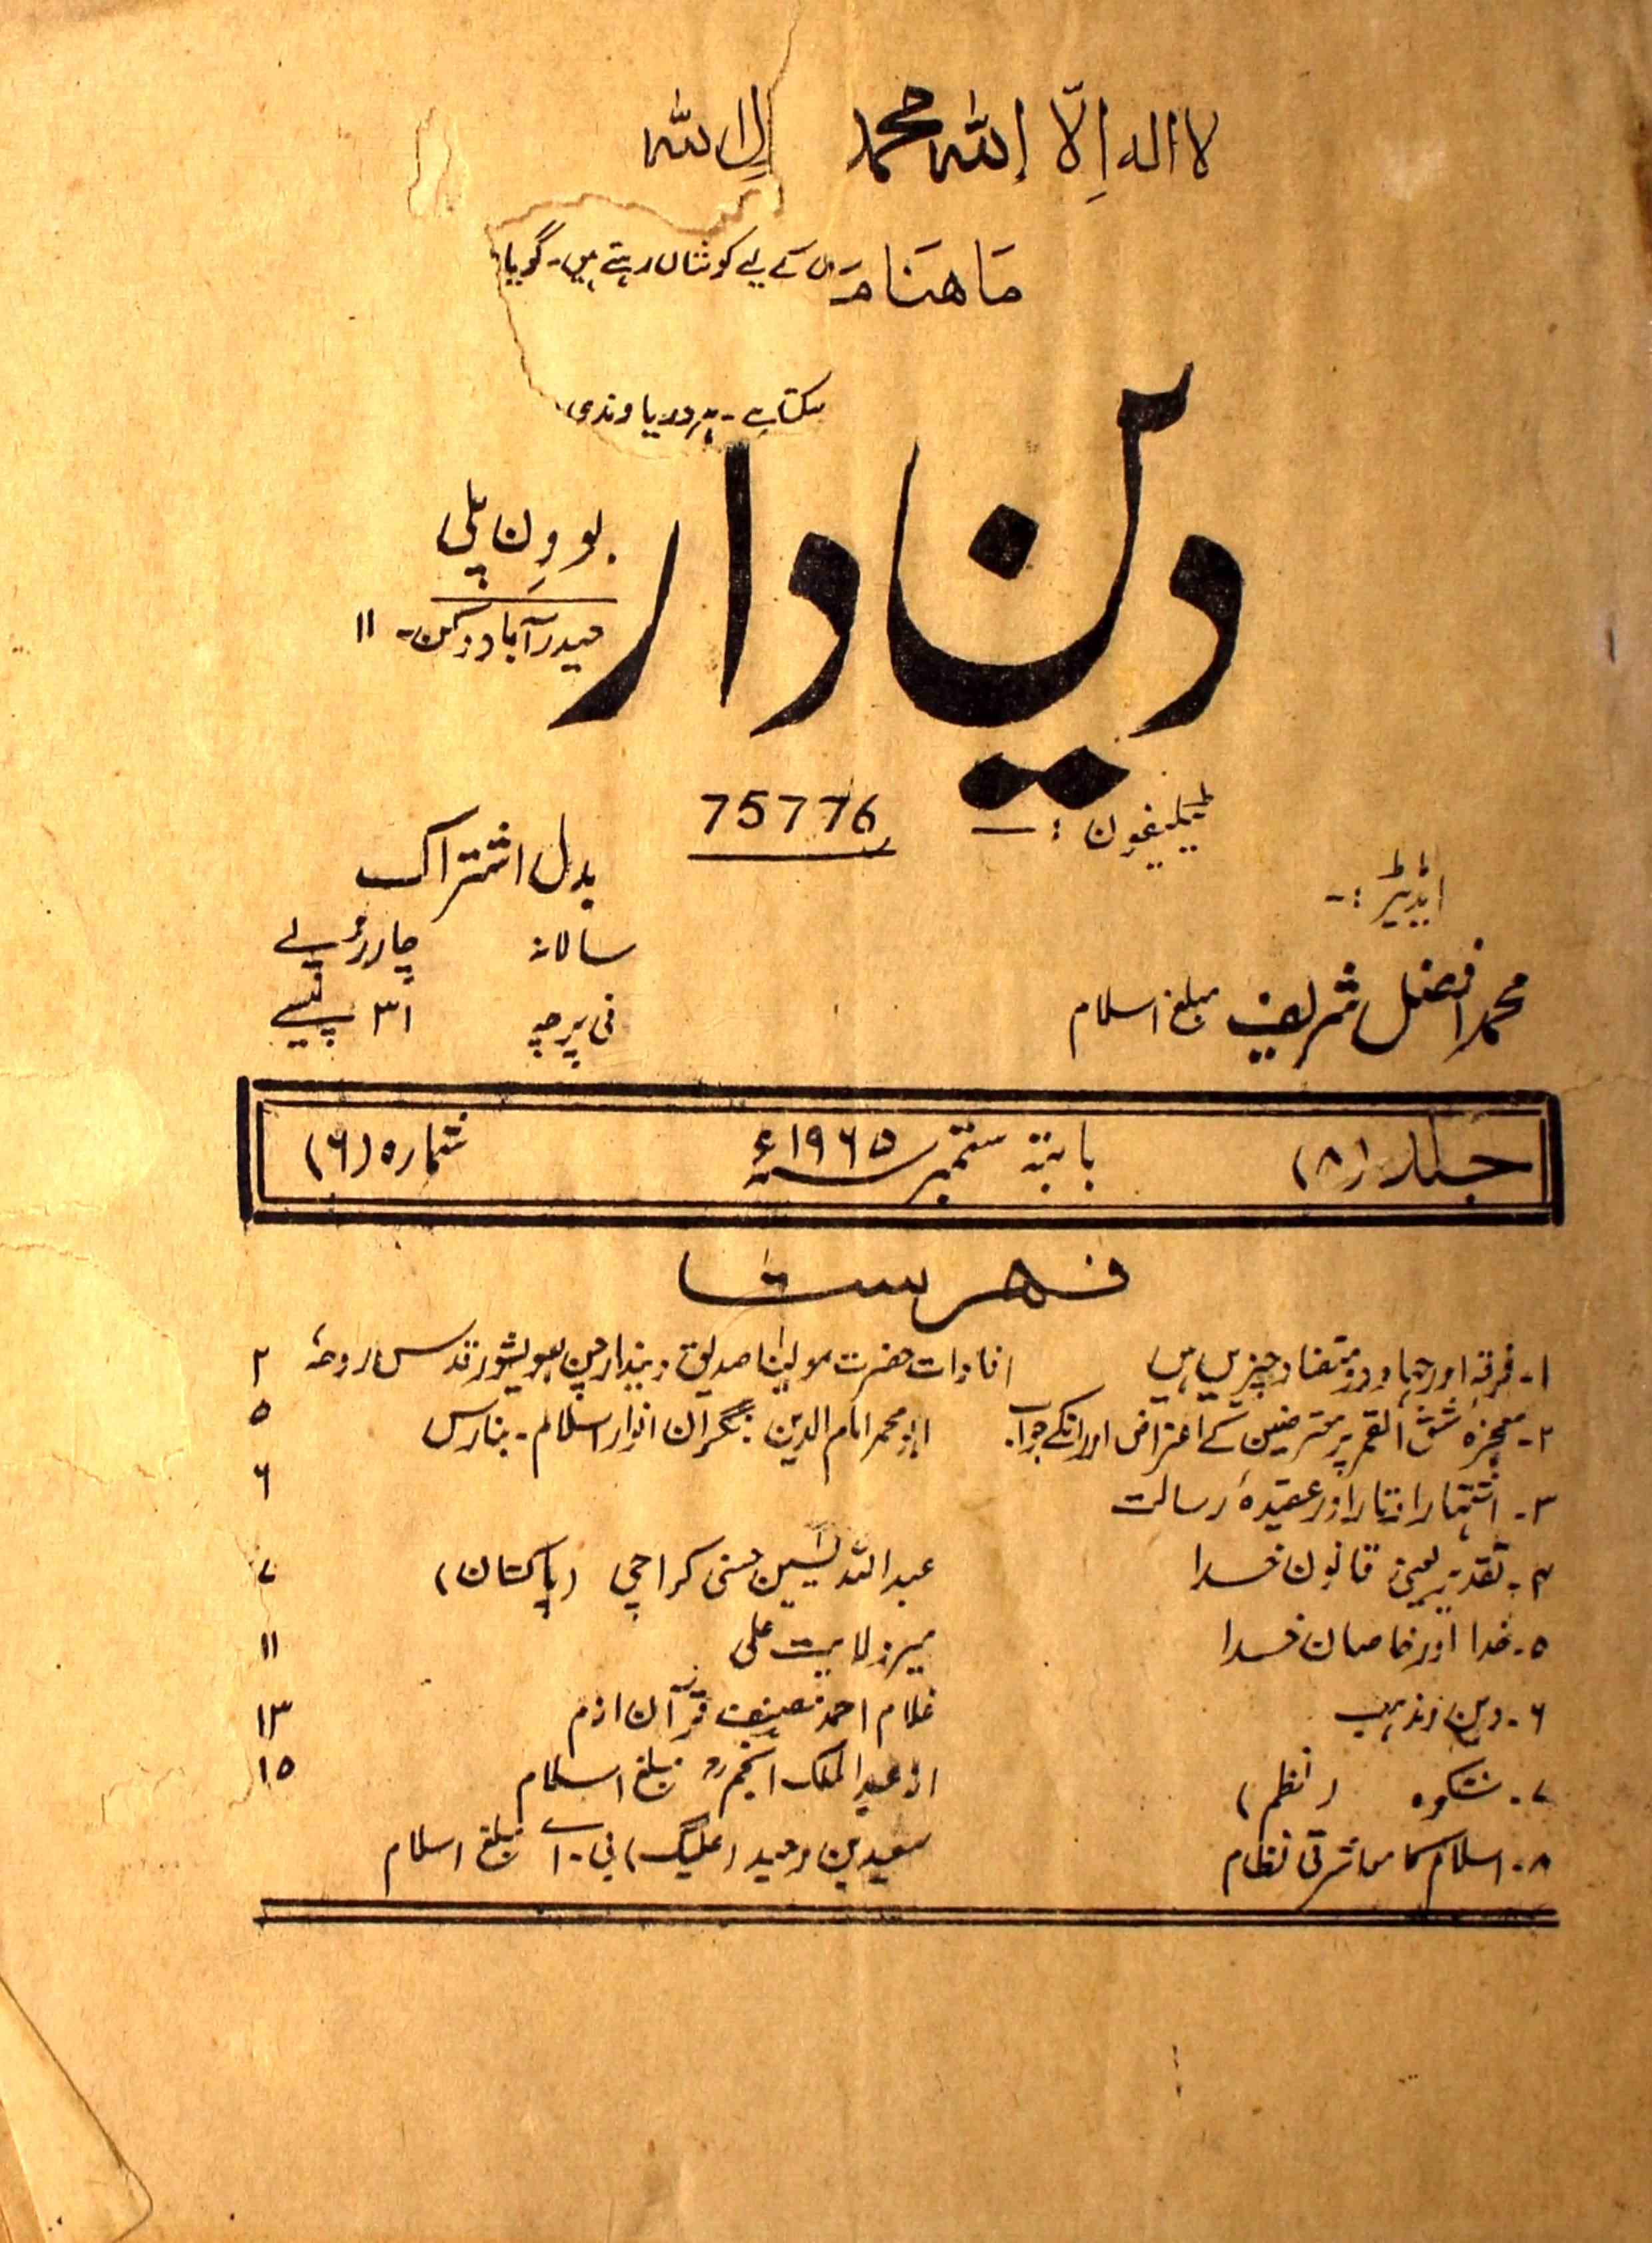 Deendar Jild 8 Shumara 6 September 1965-Svk